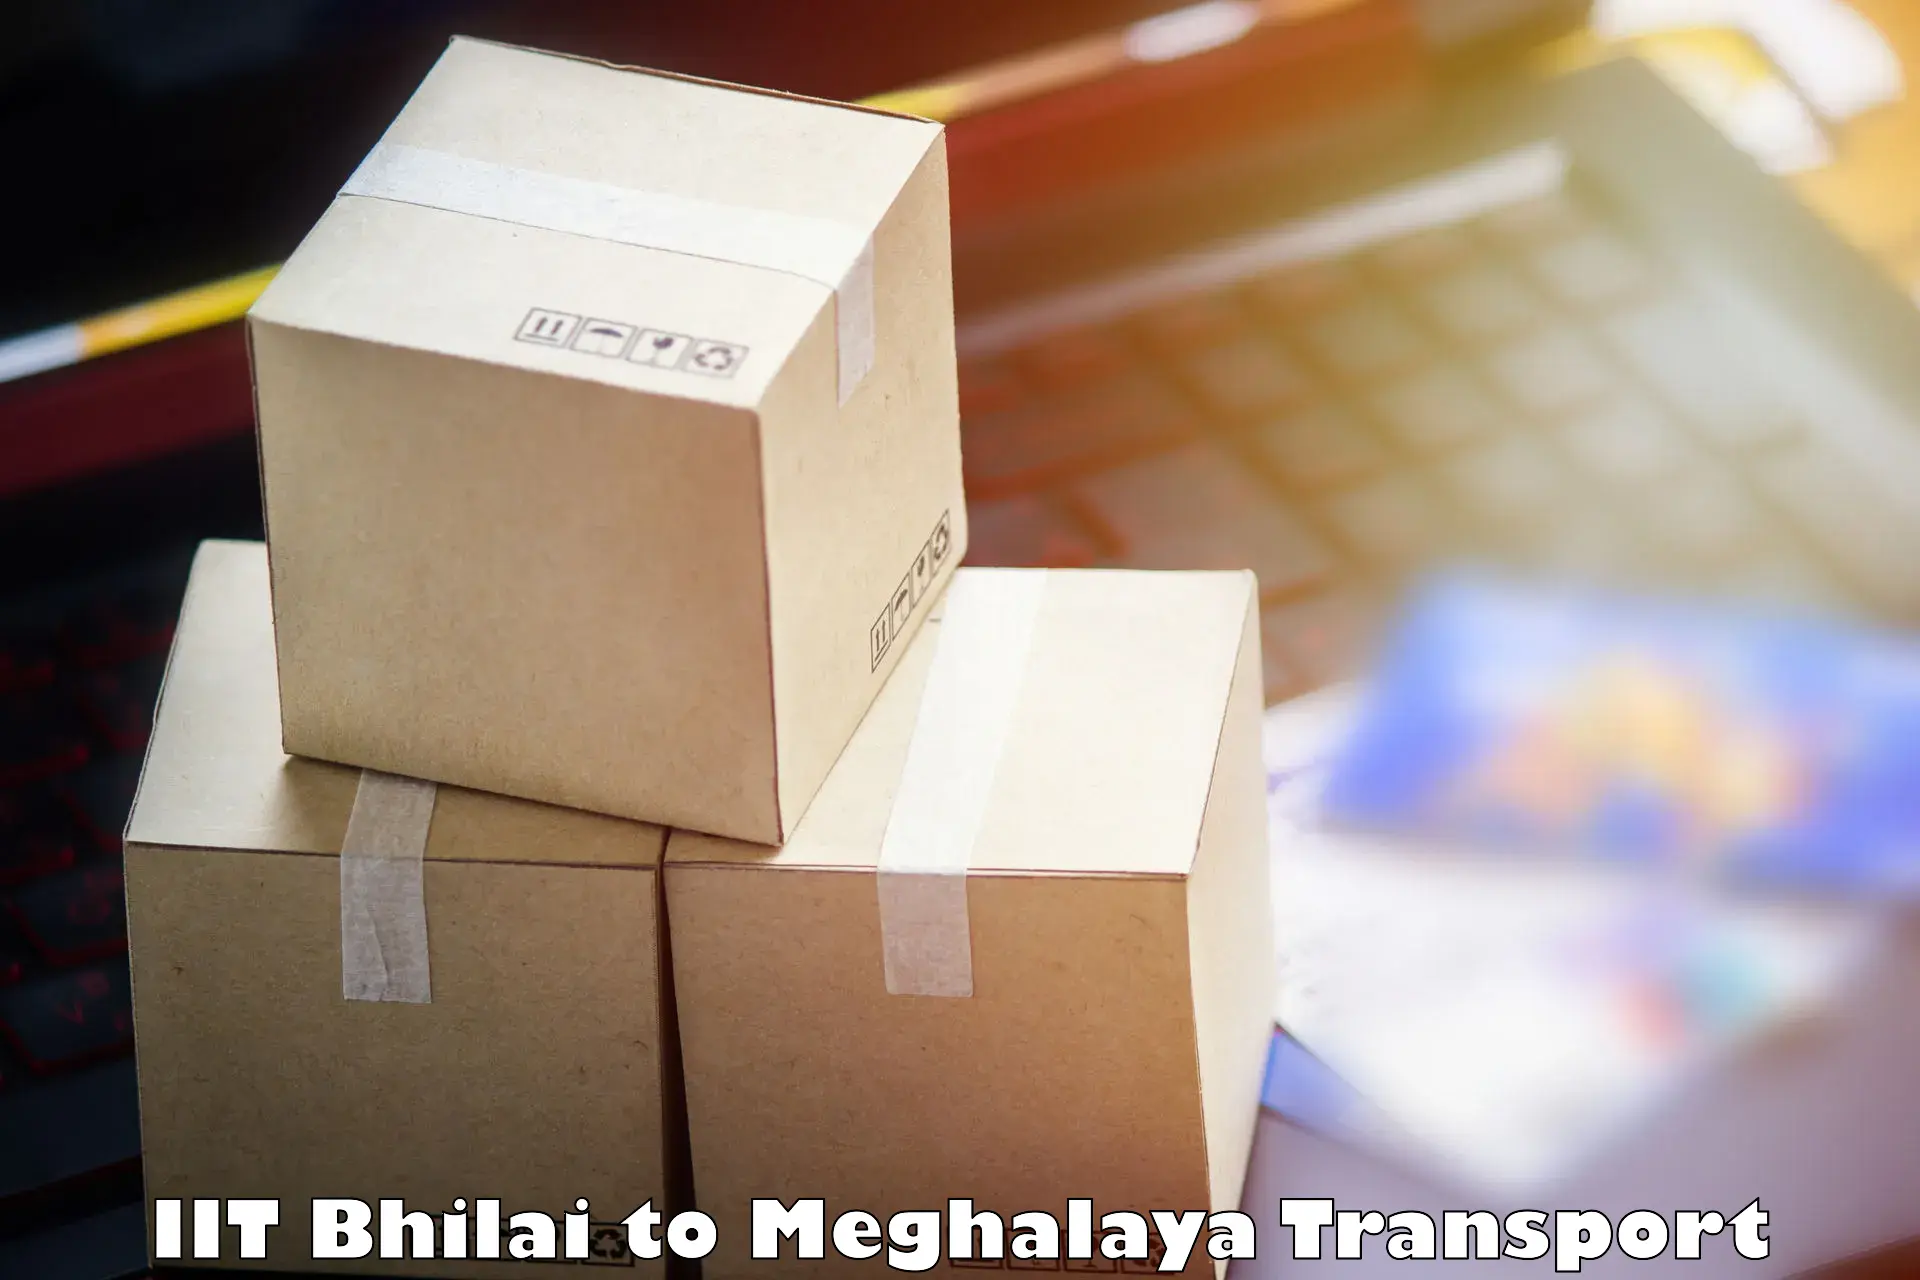 Shipping partner IIT Bhilai to Shillong